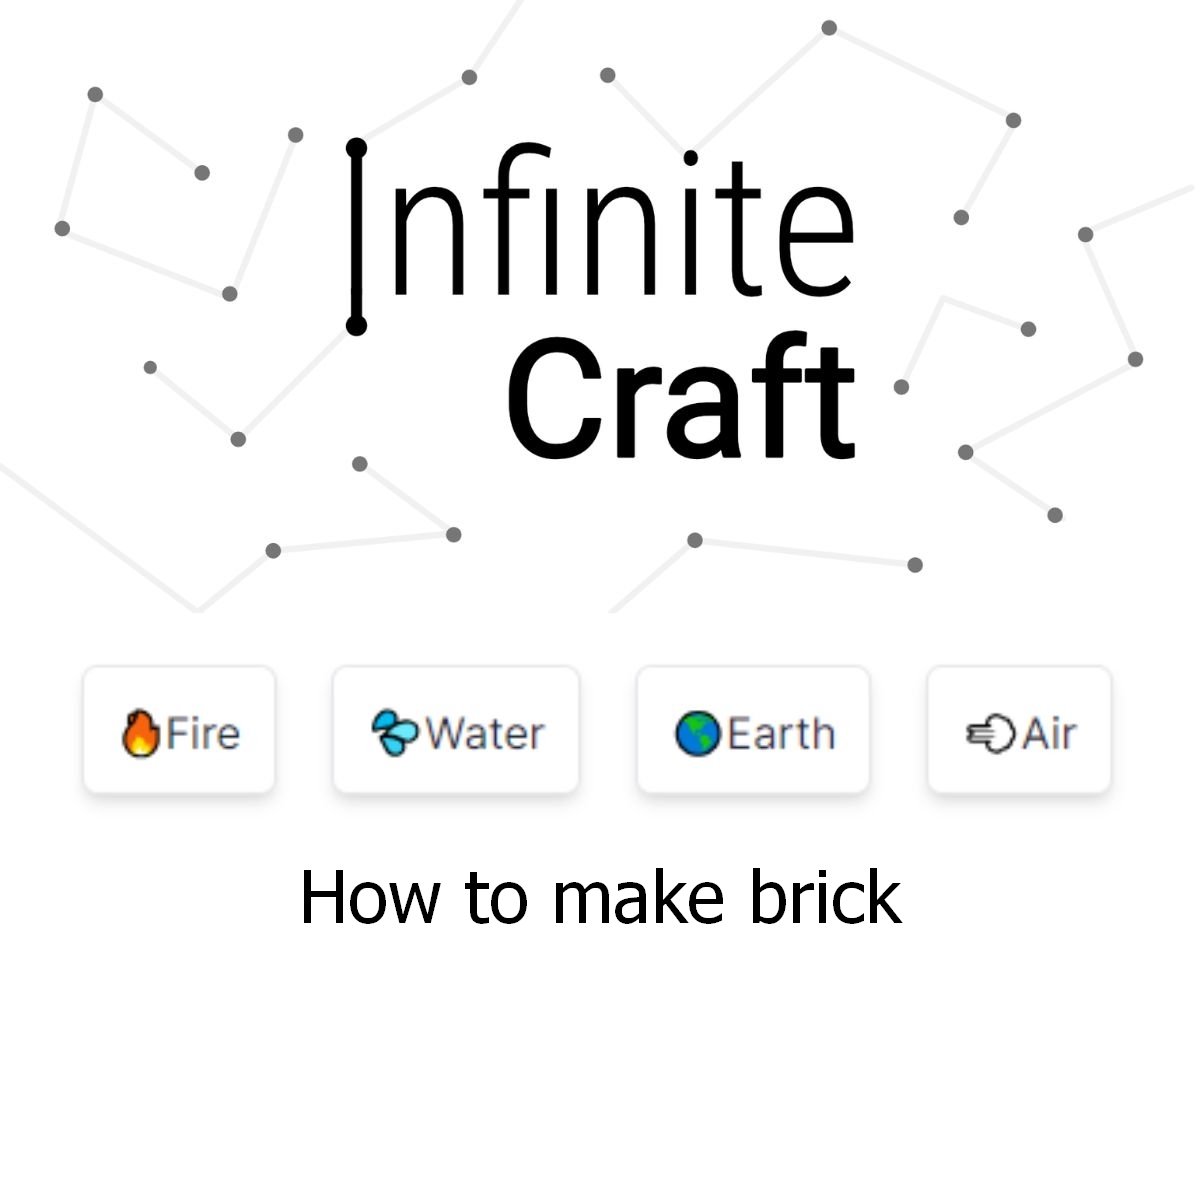 how to make brick in infinite craft